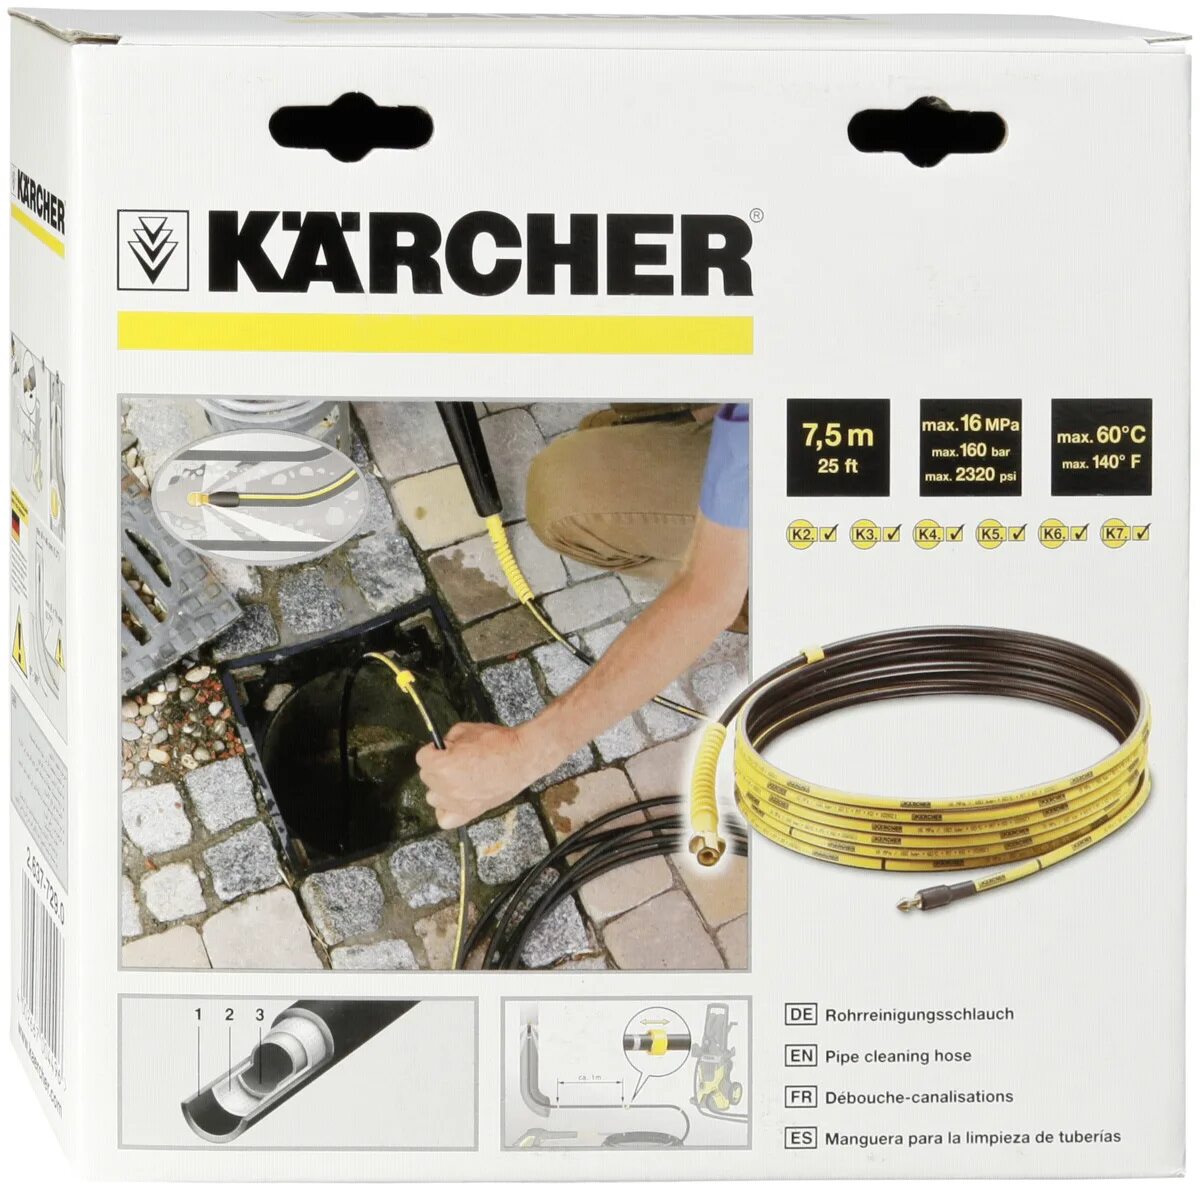 Прочистка karcher. Шланг Керхер PC7.5. Комплект для промывки труб Karcher PC 7,5. Шланг для промывки труб Karcher PC 7.5. Комплект для промывки труб Karcher 7,5 м, для k2-k7 - арт. 2.637-729.0.